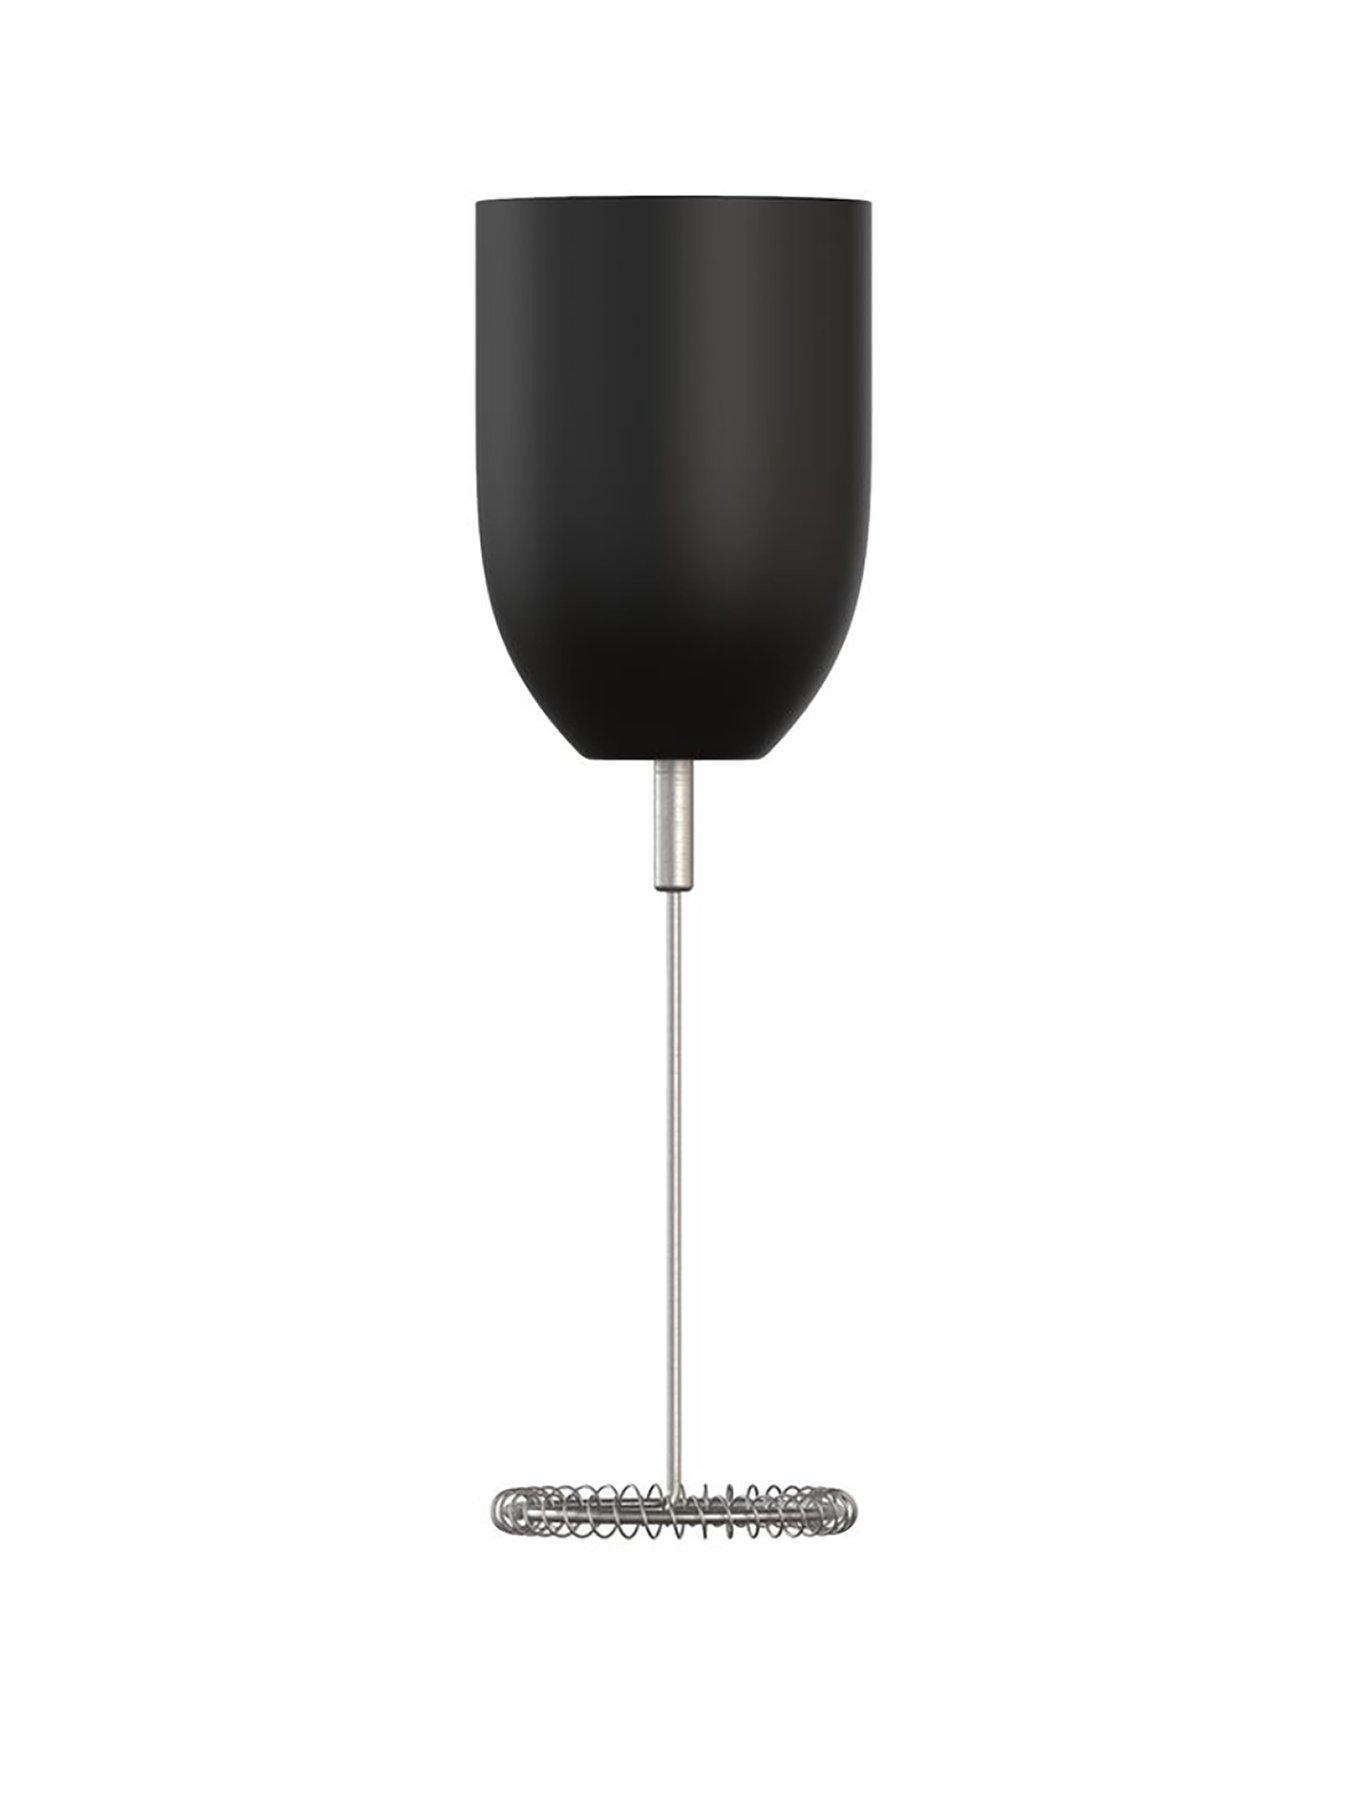 Black+decker Kitchen Wand Attachment Hand Mixer (BCKM101HM)